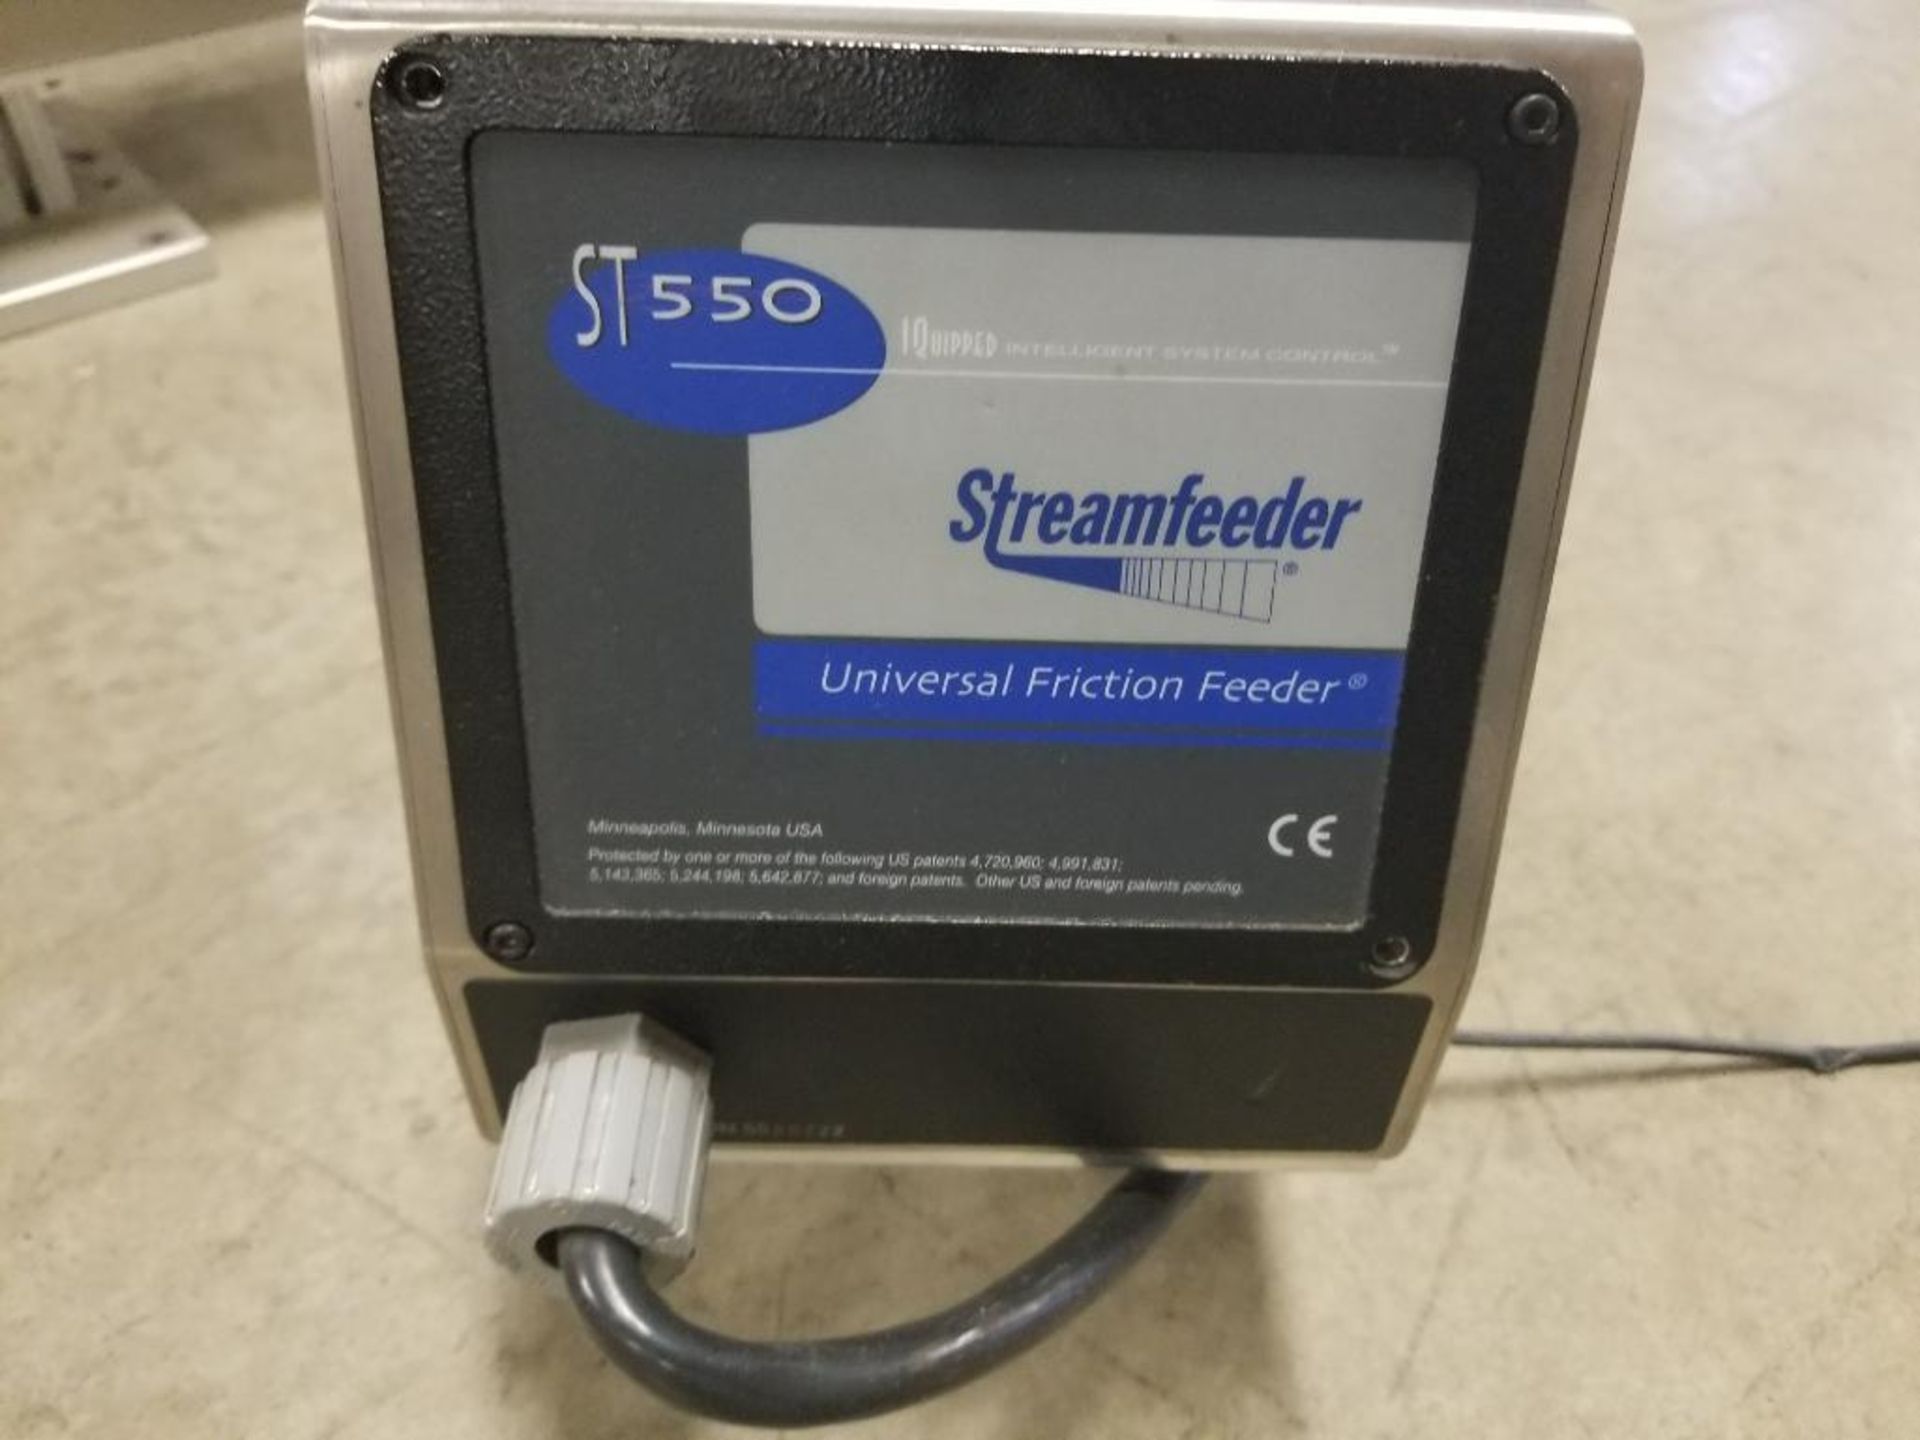 Streamfeeder universal friction feeder. Model ST550. - Image 3 of 4